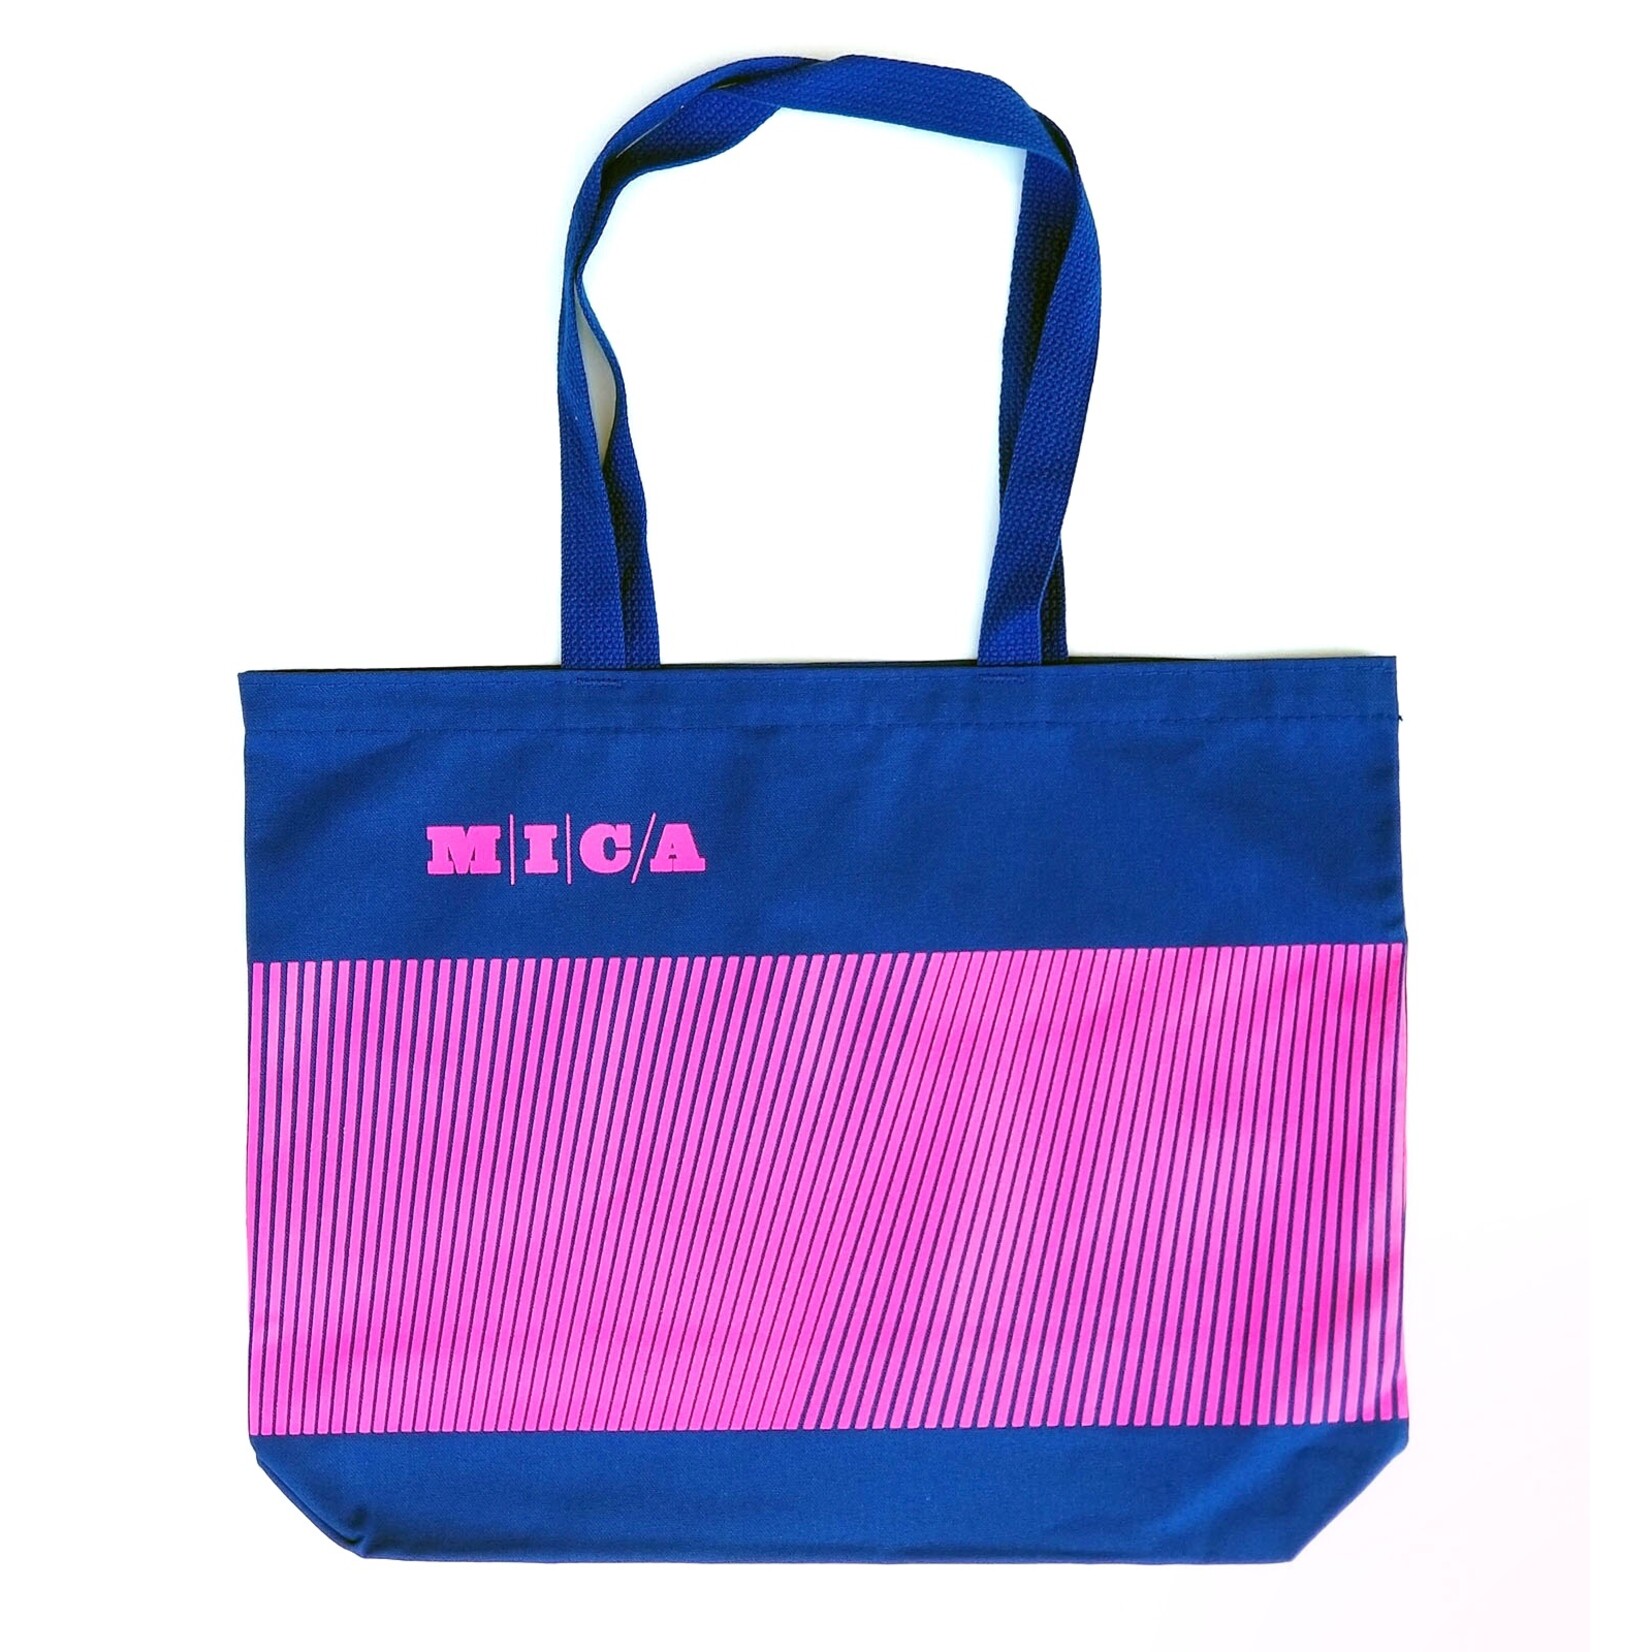 MICA Tote Bag w/ Stripe Design